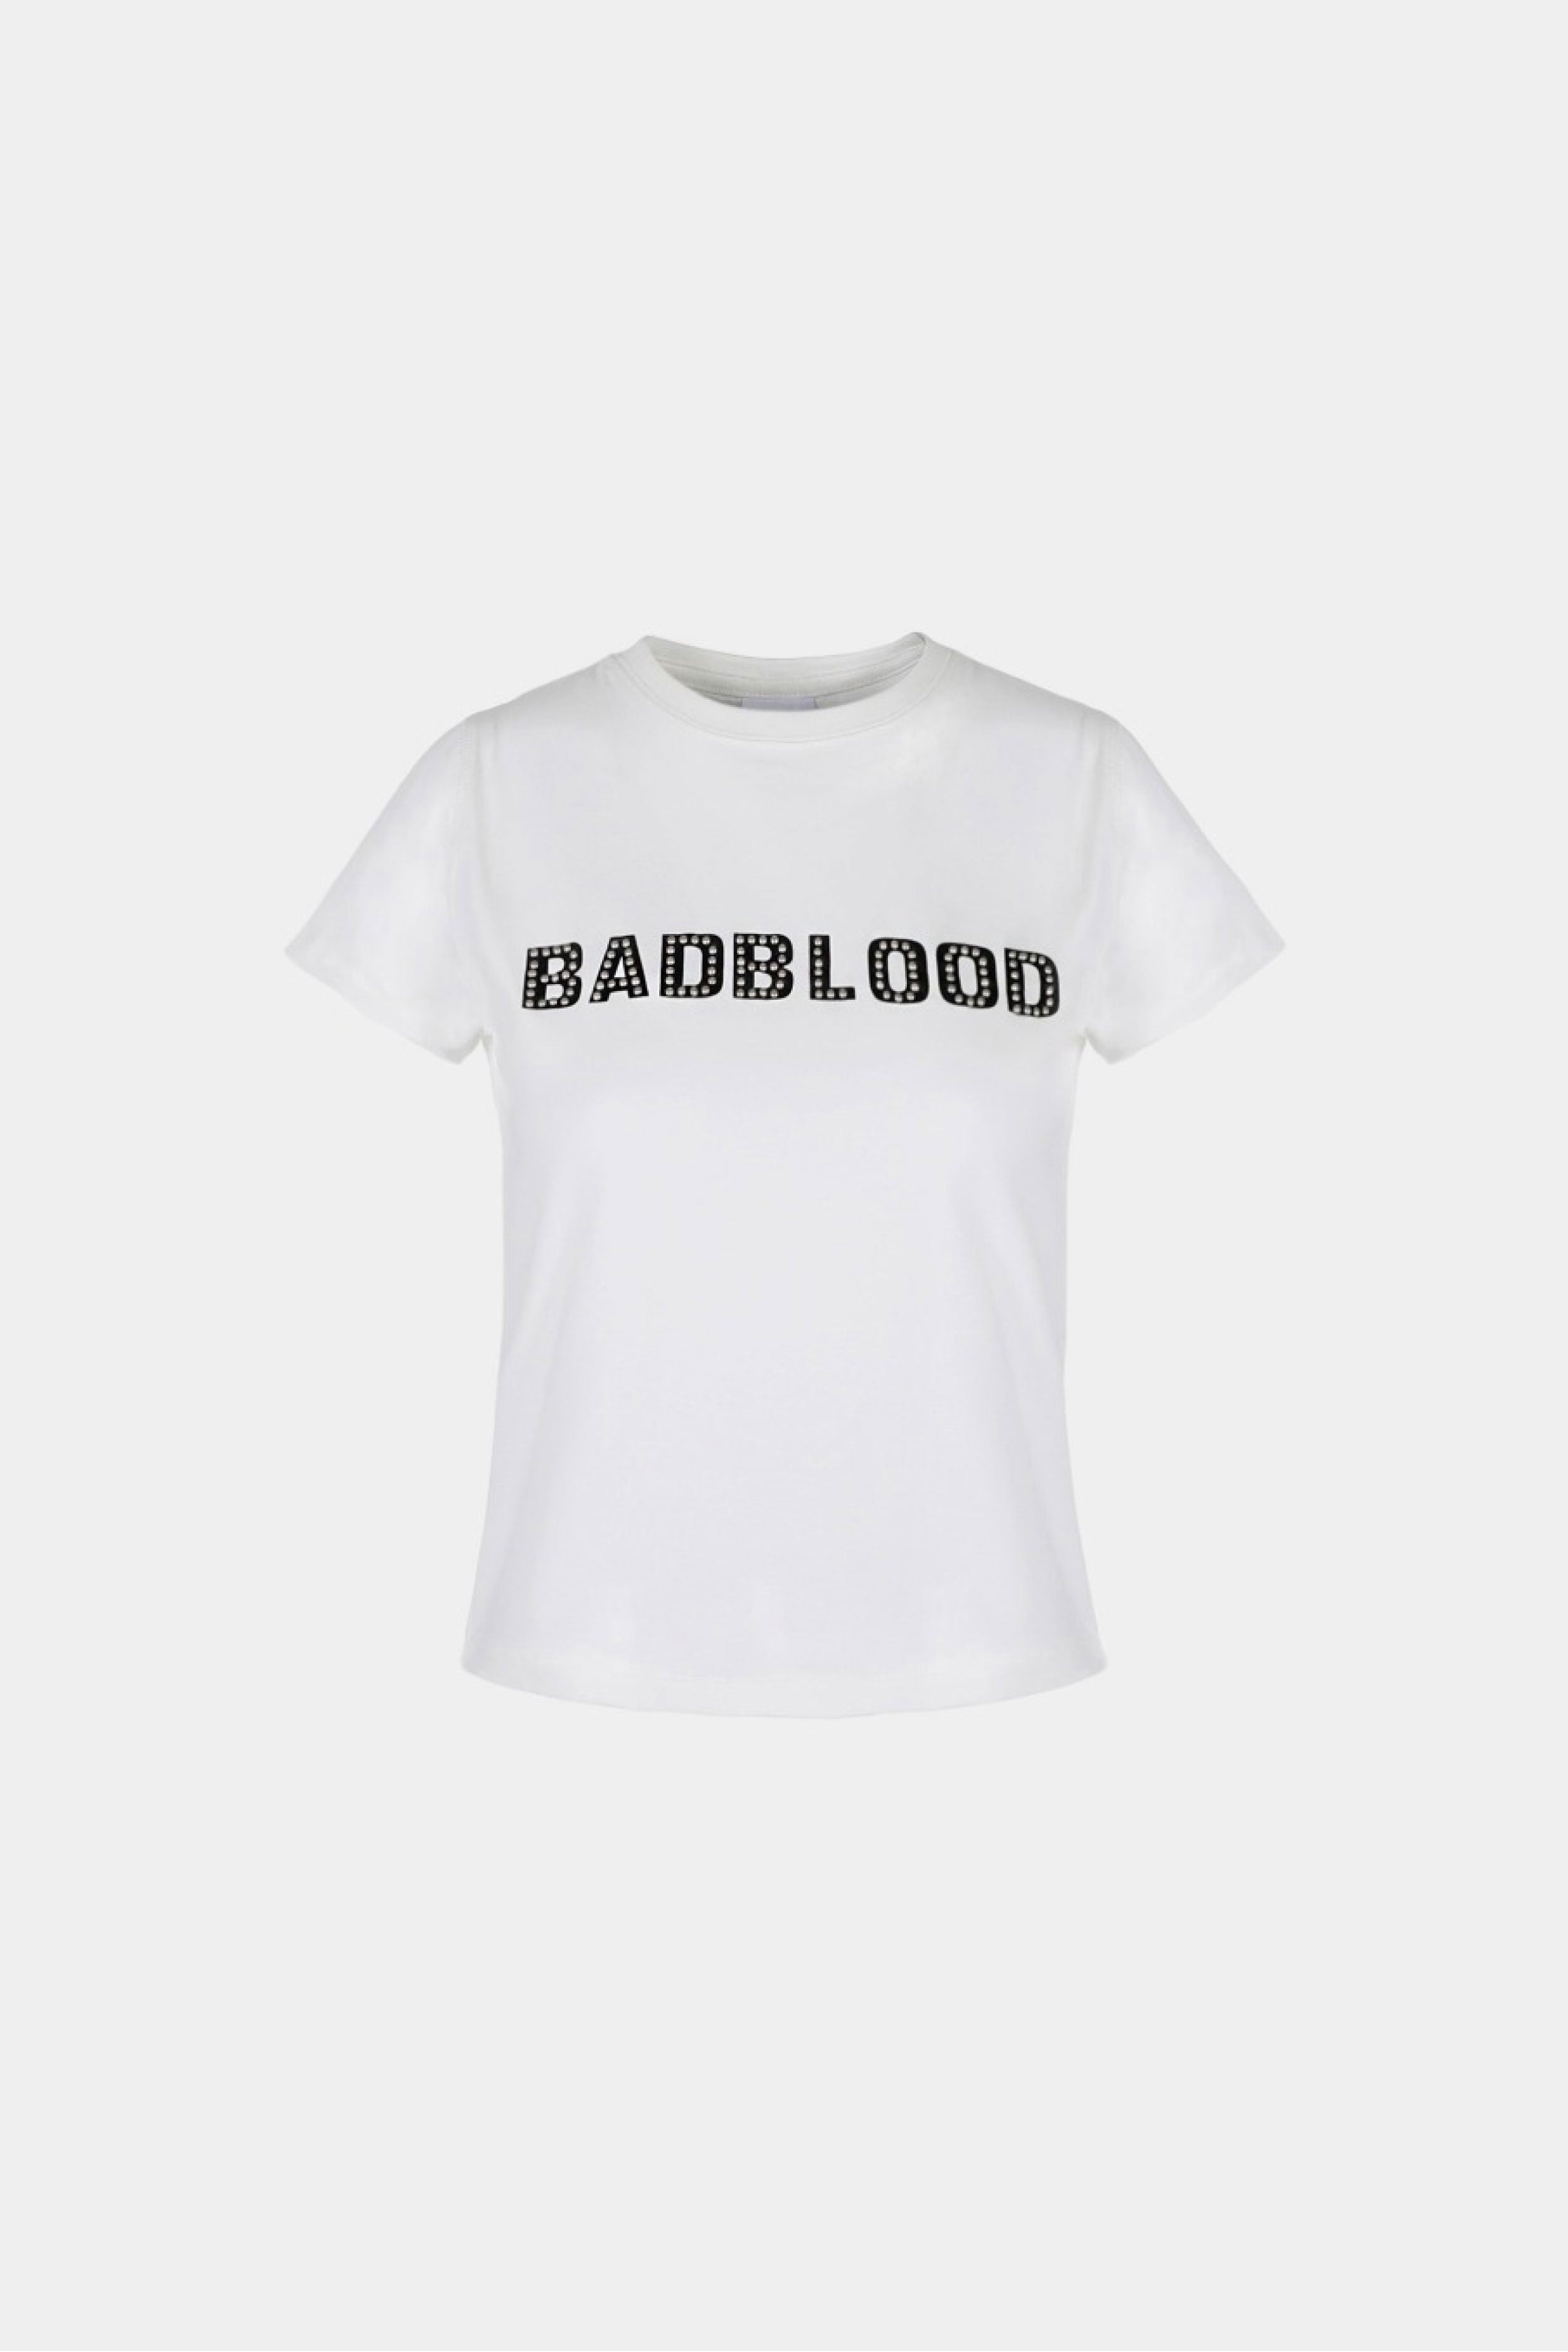 Badblood Studded Logo Short Sleeve Slim Fit White